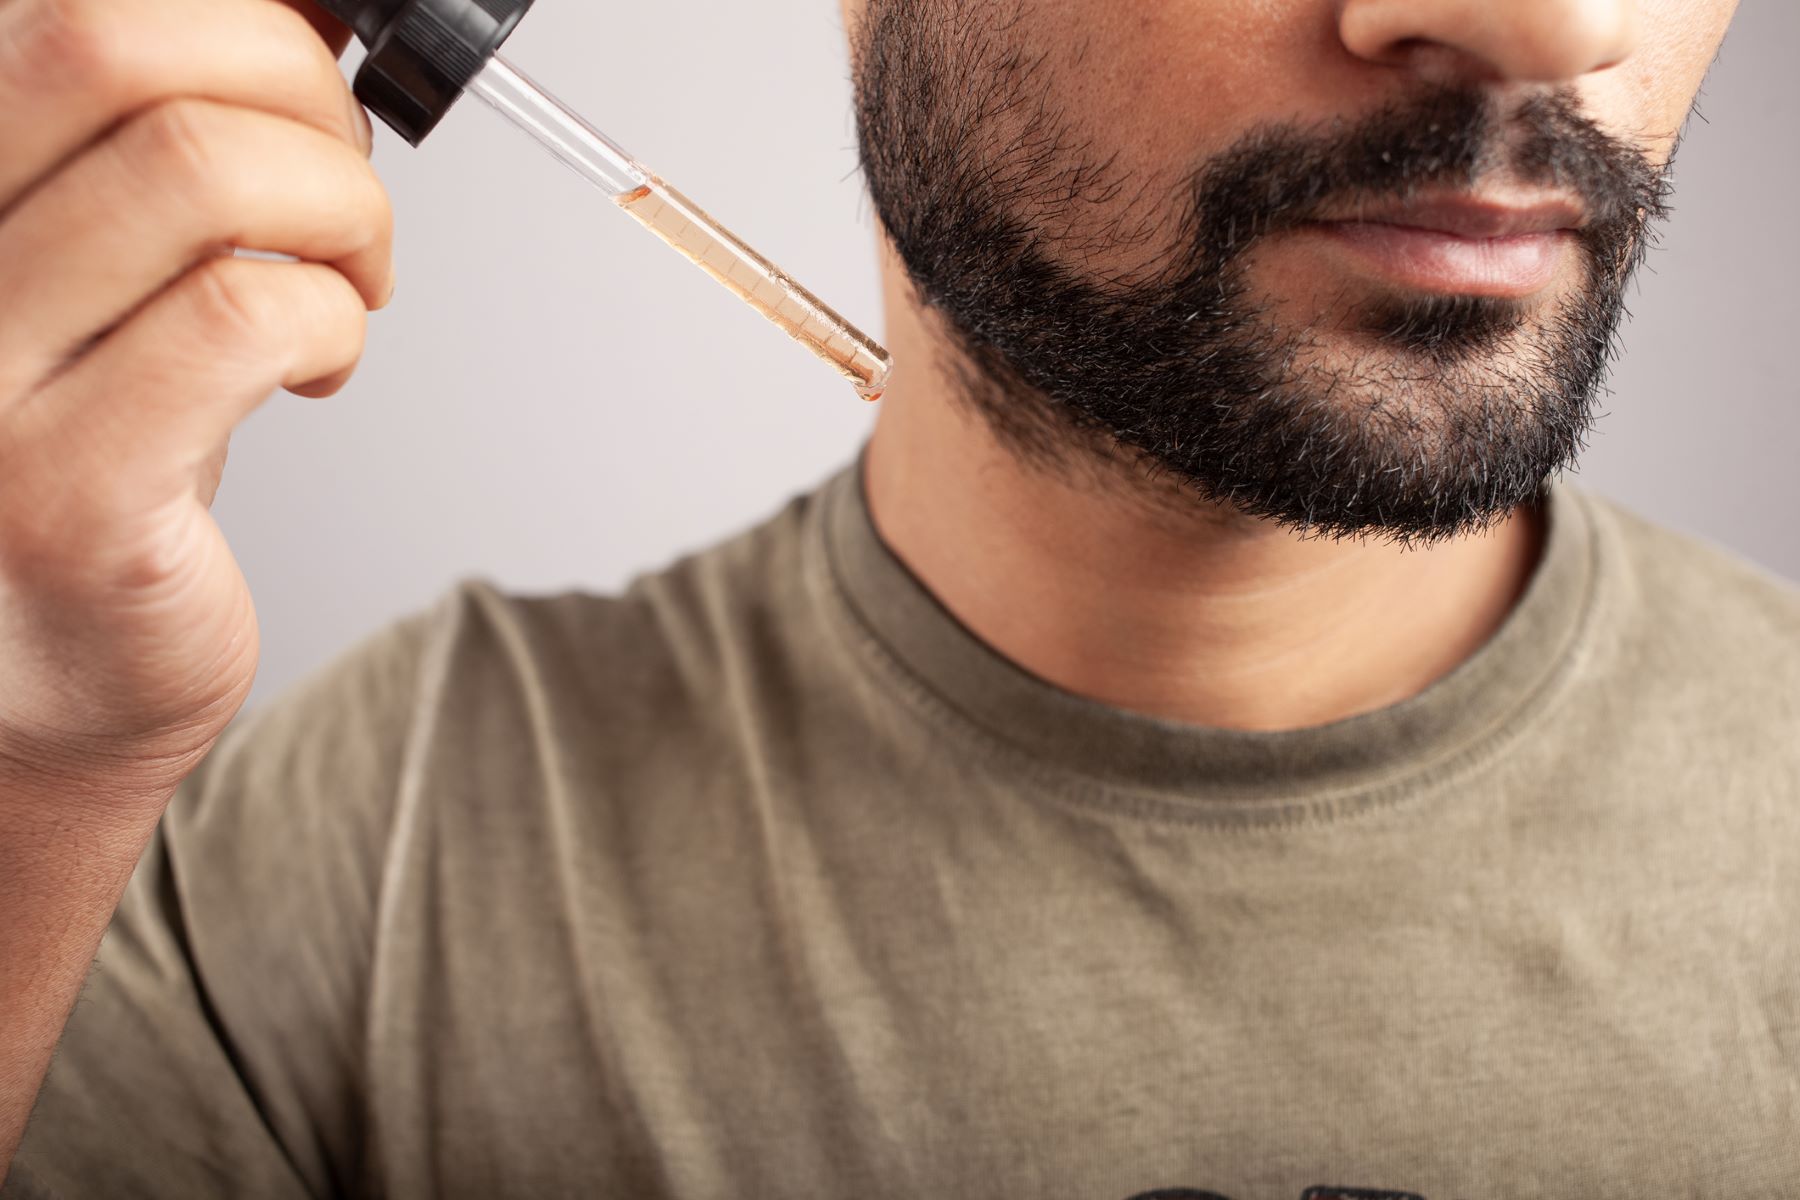 Man applying topical Minoxidil to his beard